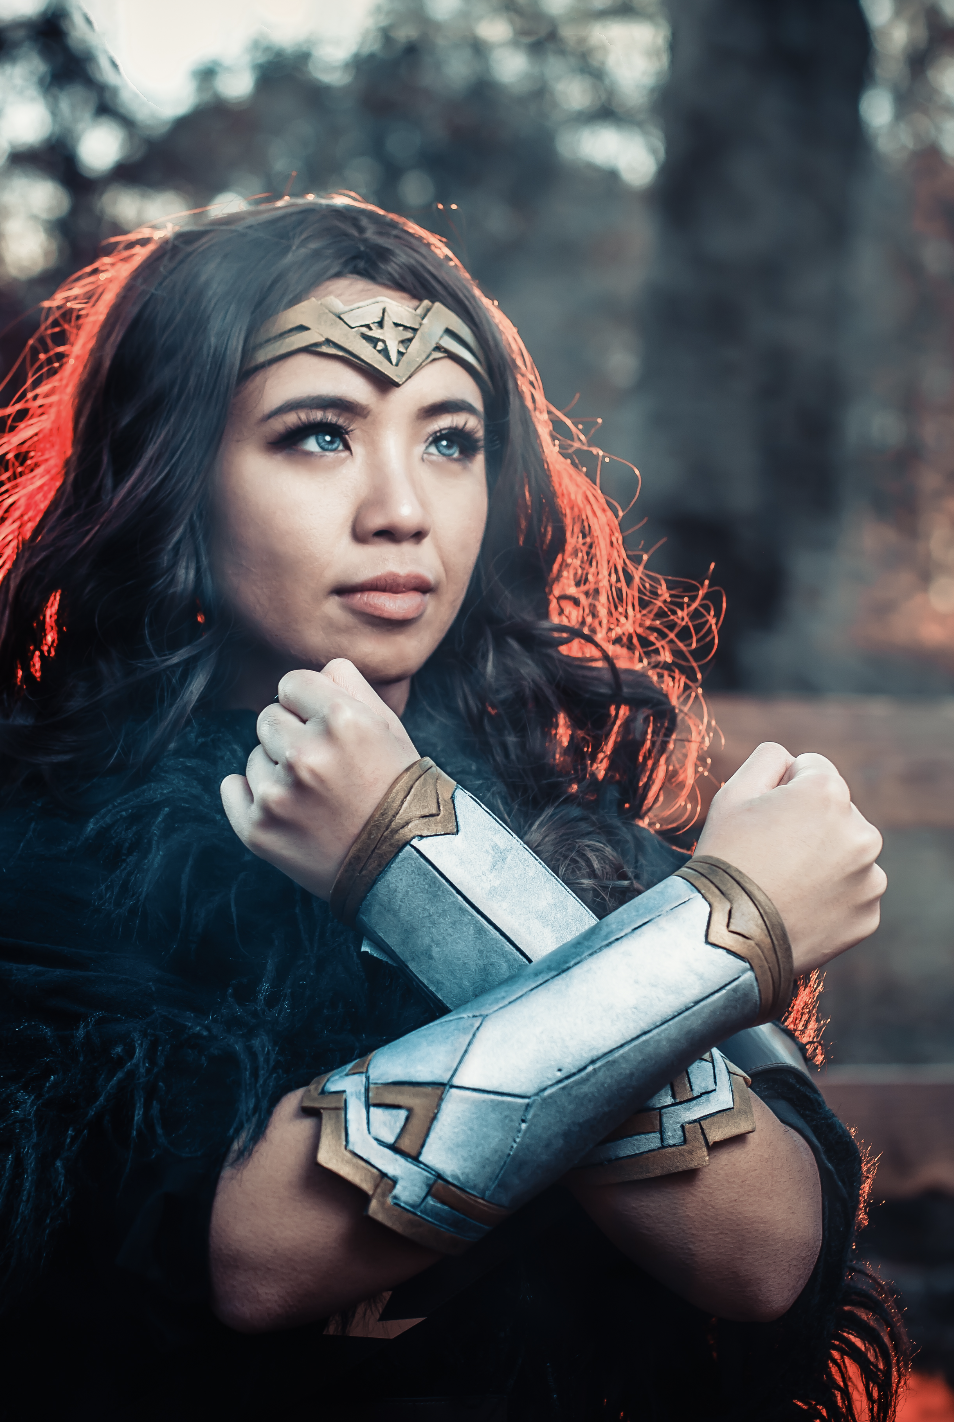 DIY Wonder Woman Costume : r/pics